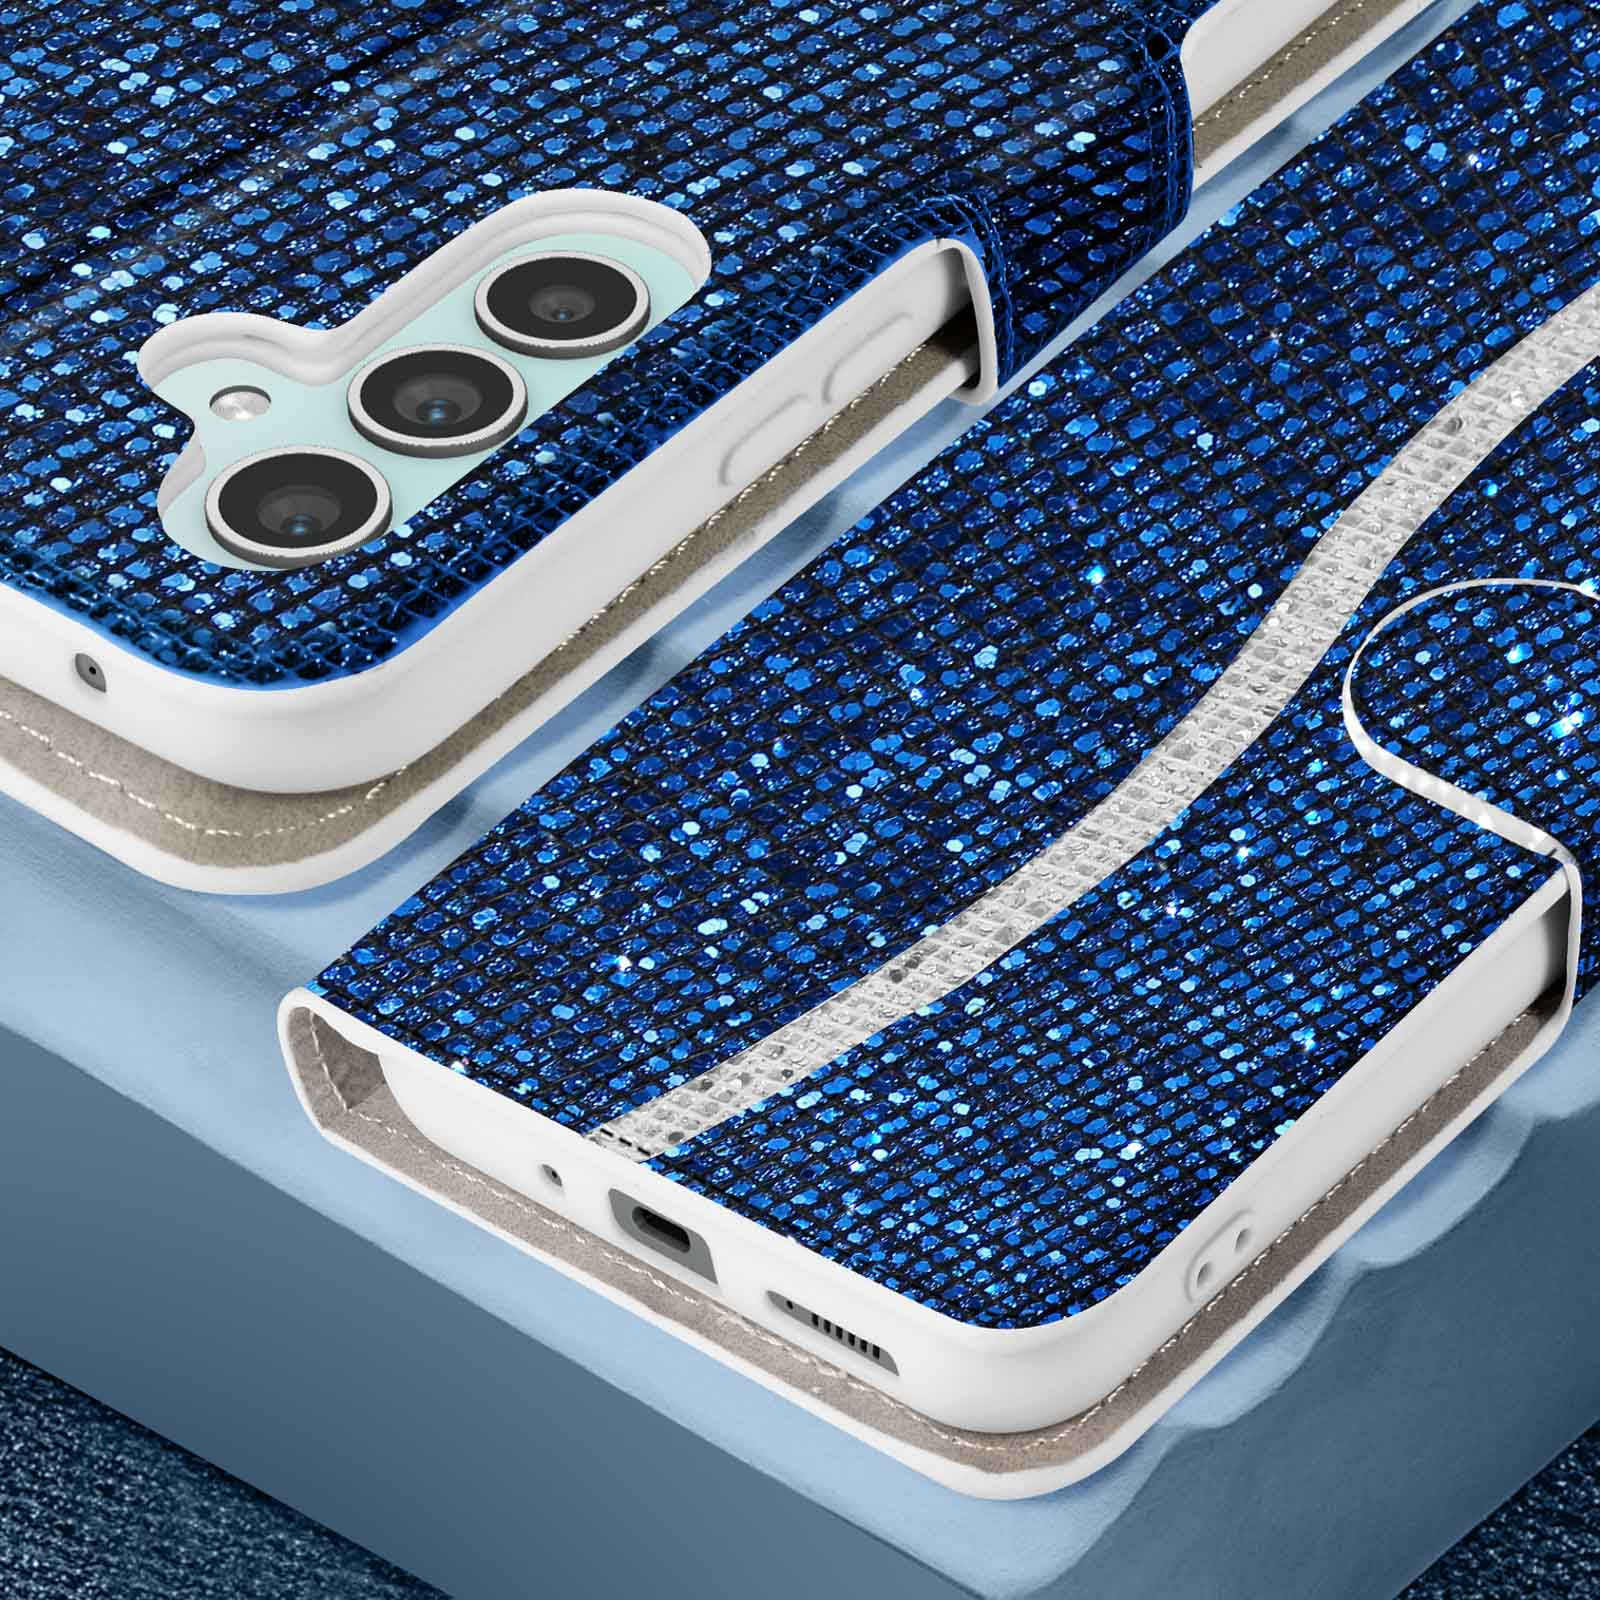 5G, Bookcover, AVIZAR A34 Disco Galaxy Samsung, Series, Blau Edition Glam